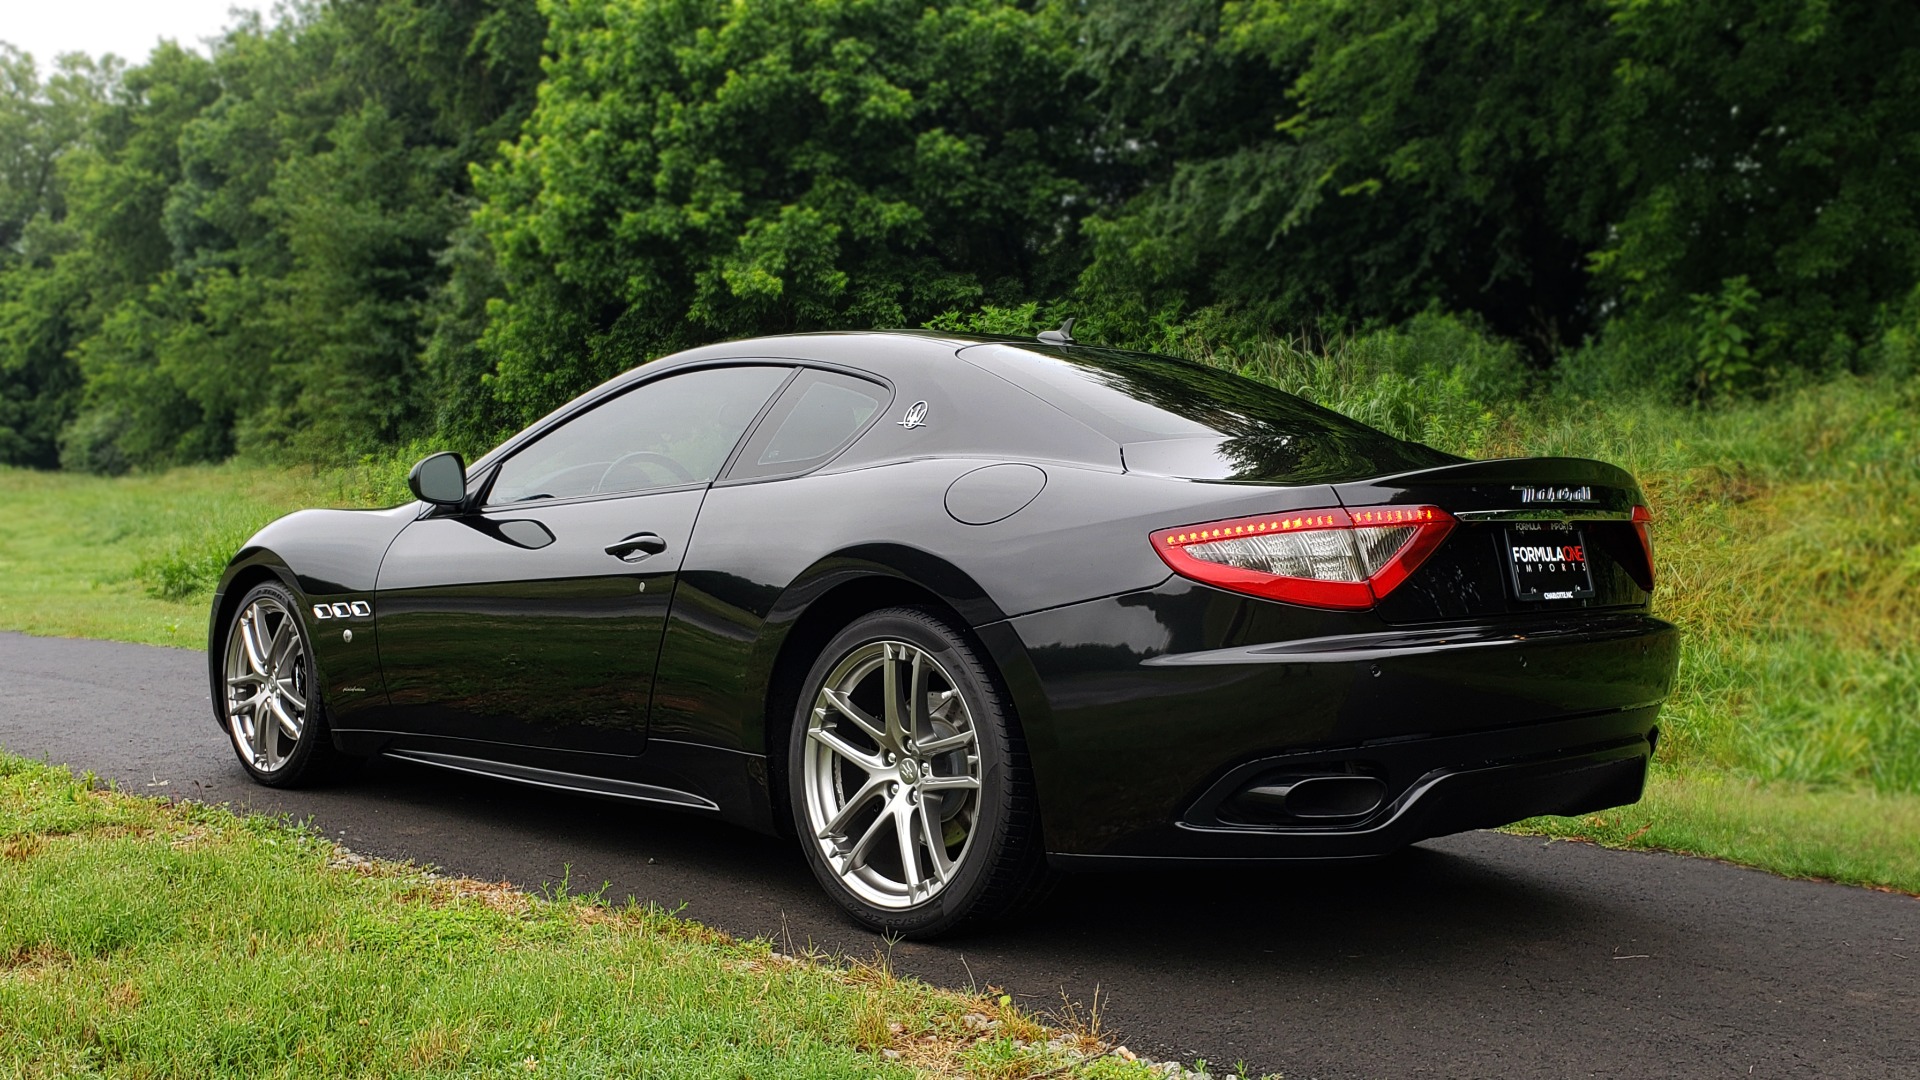 Used 2013 Maserati GRANTURISMO SPORT 4.7L V8 / BOSE / PARK ASSIST / 20IN WHEELS for sale Sold at Formula Imports in Charlotte NC 28227 5